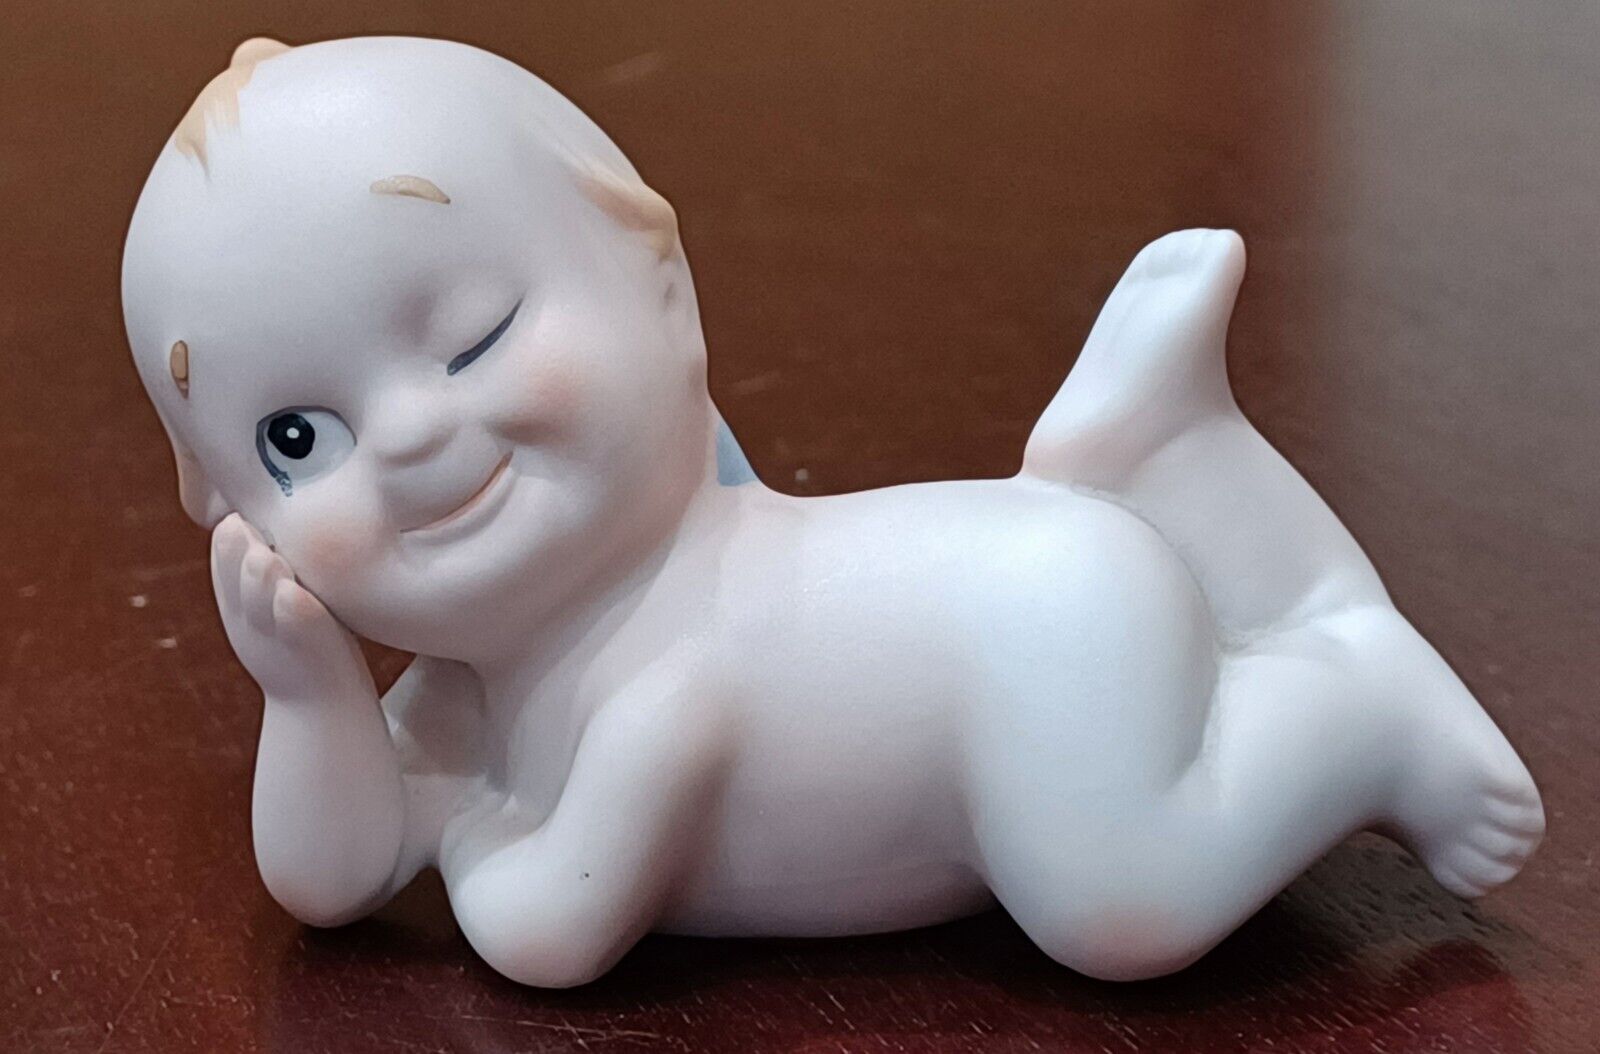 Vintage Kewpie Piano Baby Figurine Winking Naked Bisque Ceramic Made in Japan